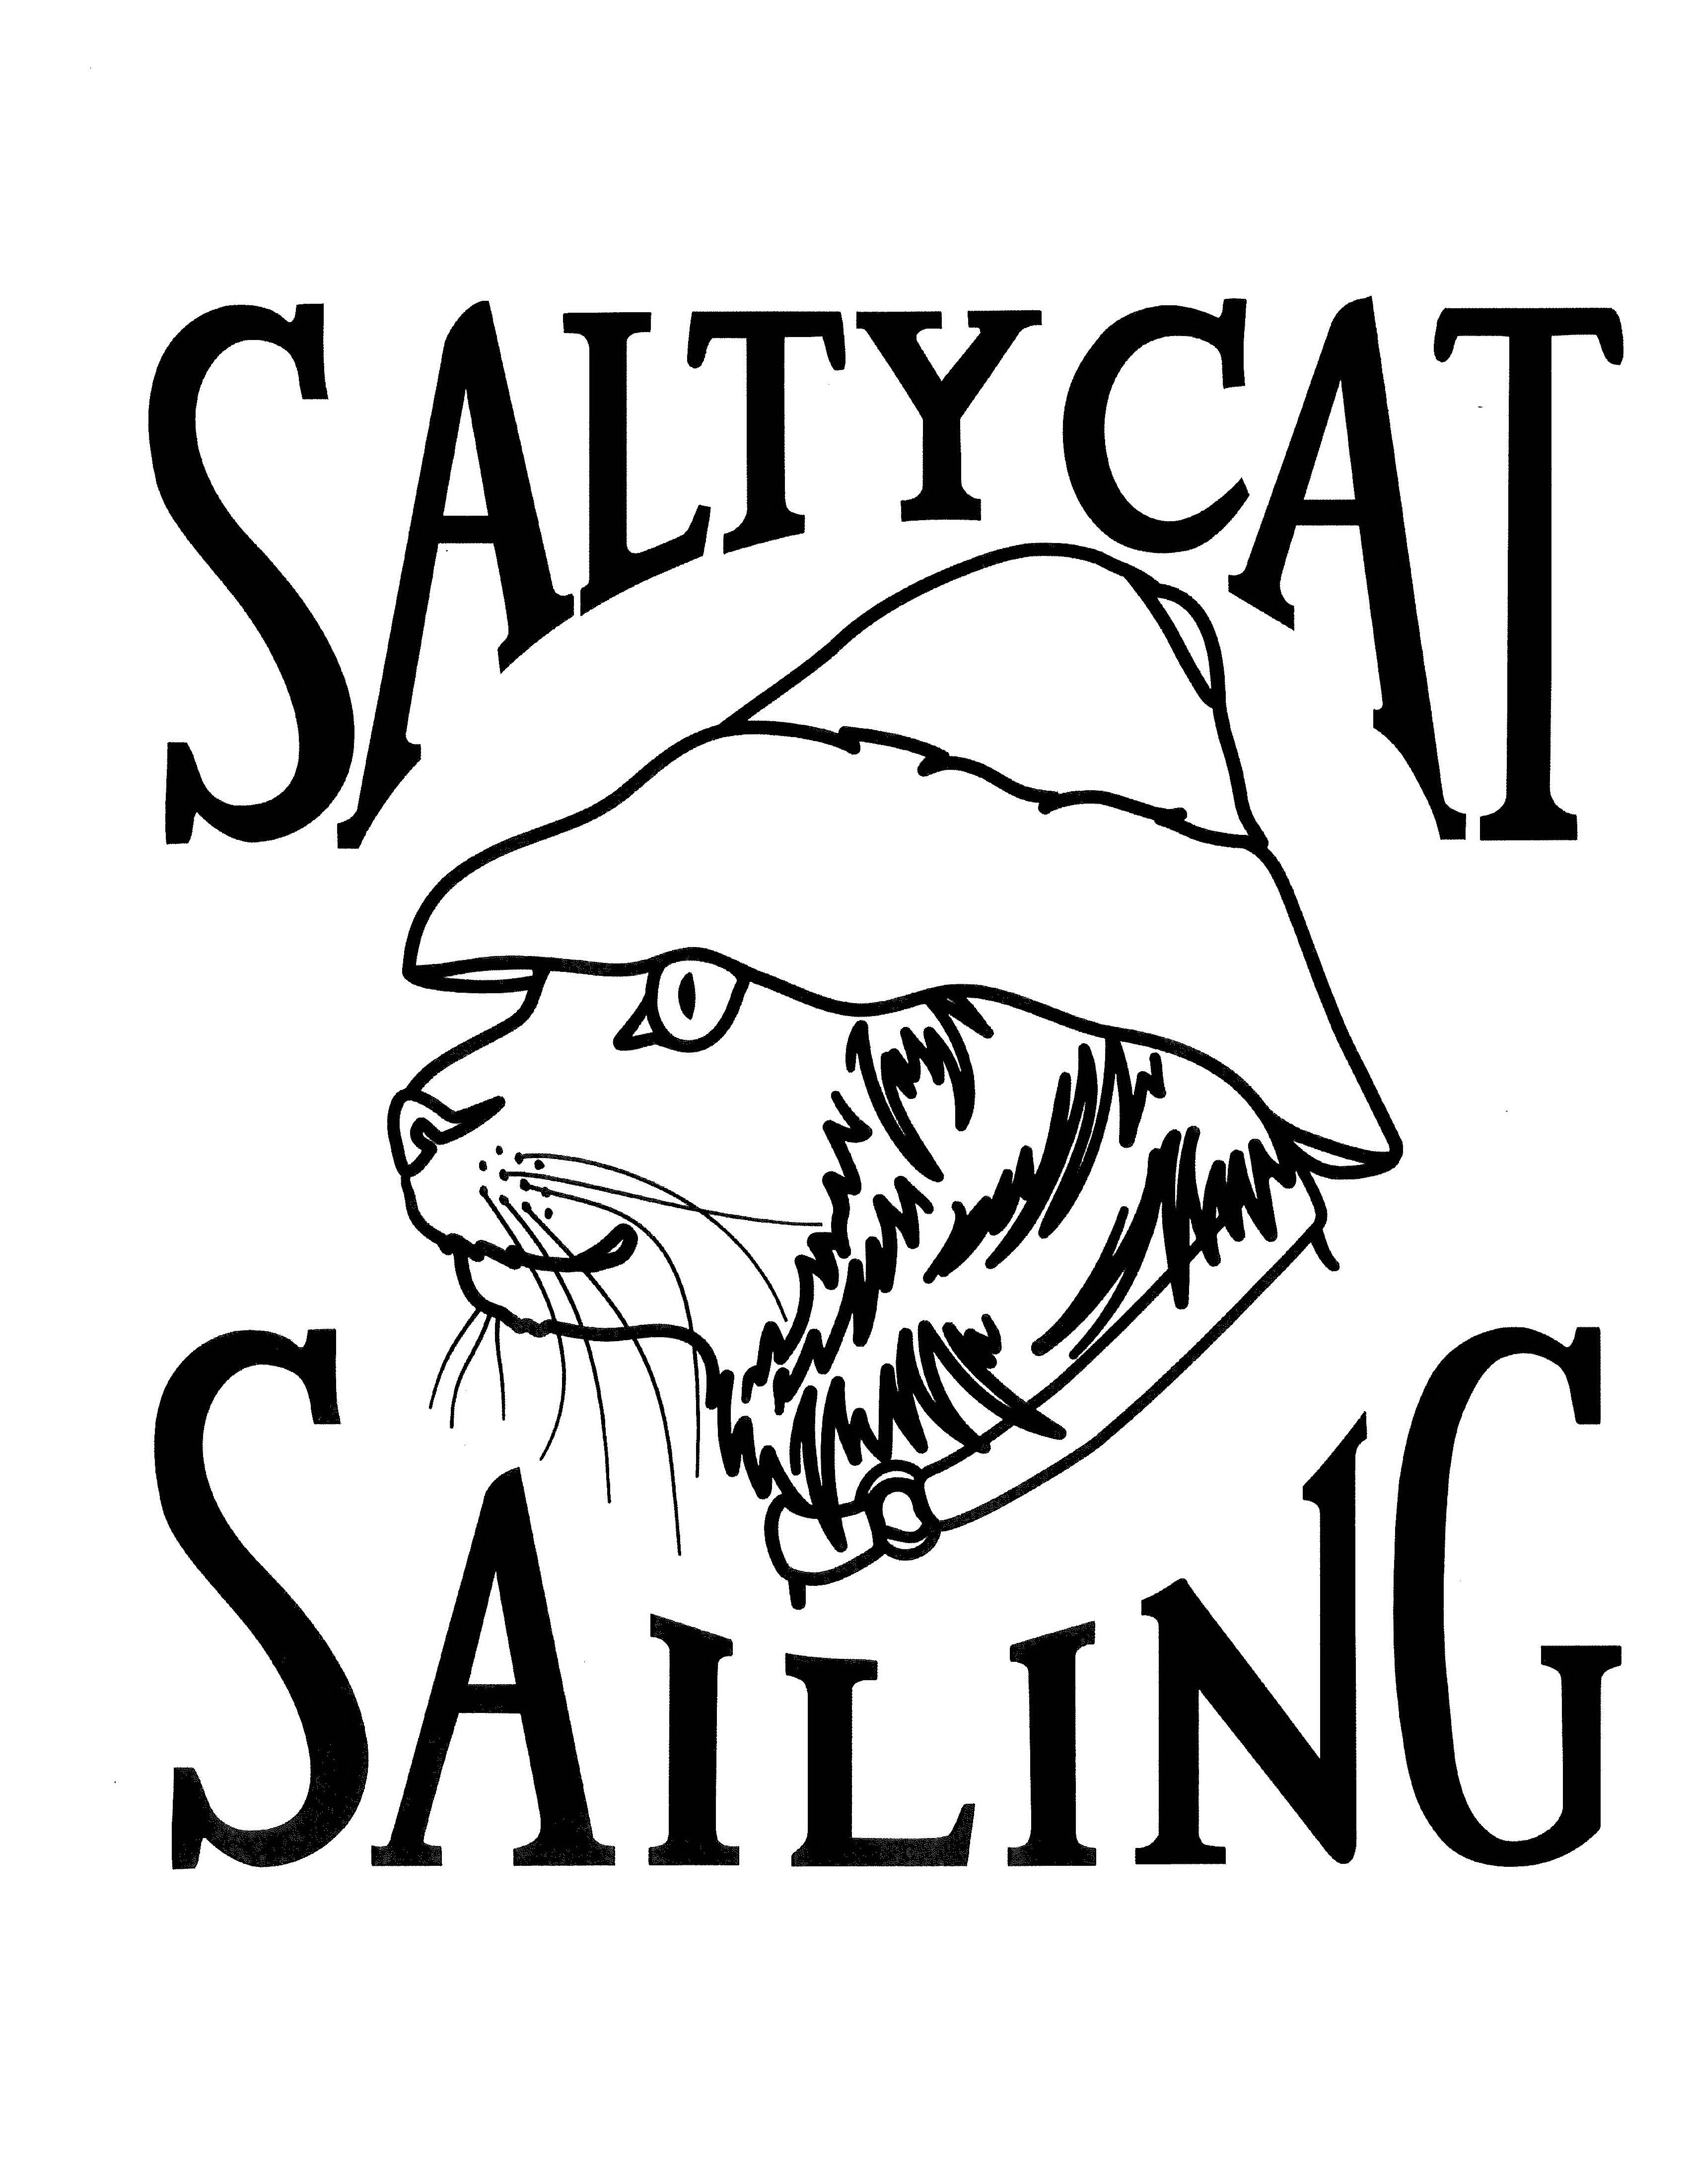  SALTY CAT SAILING